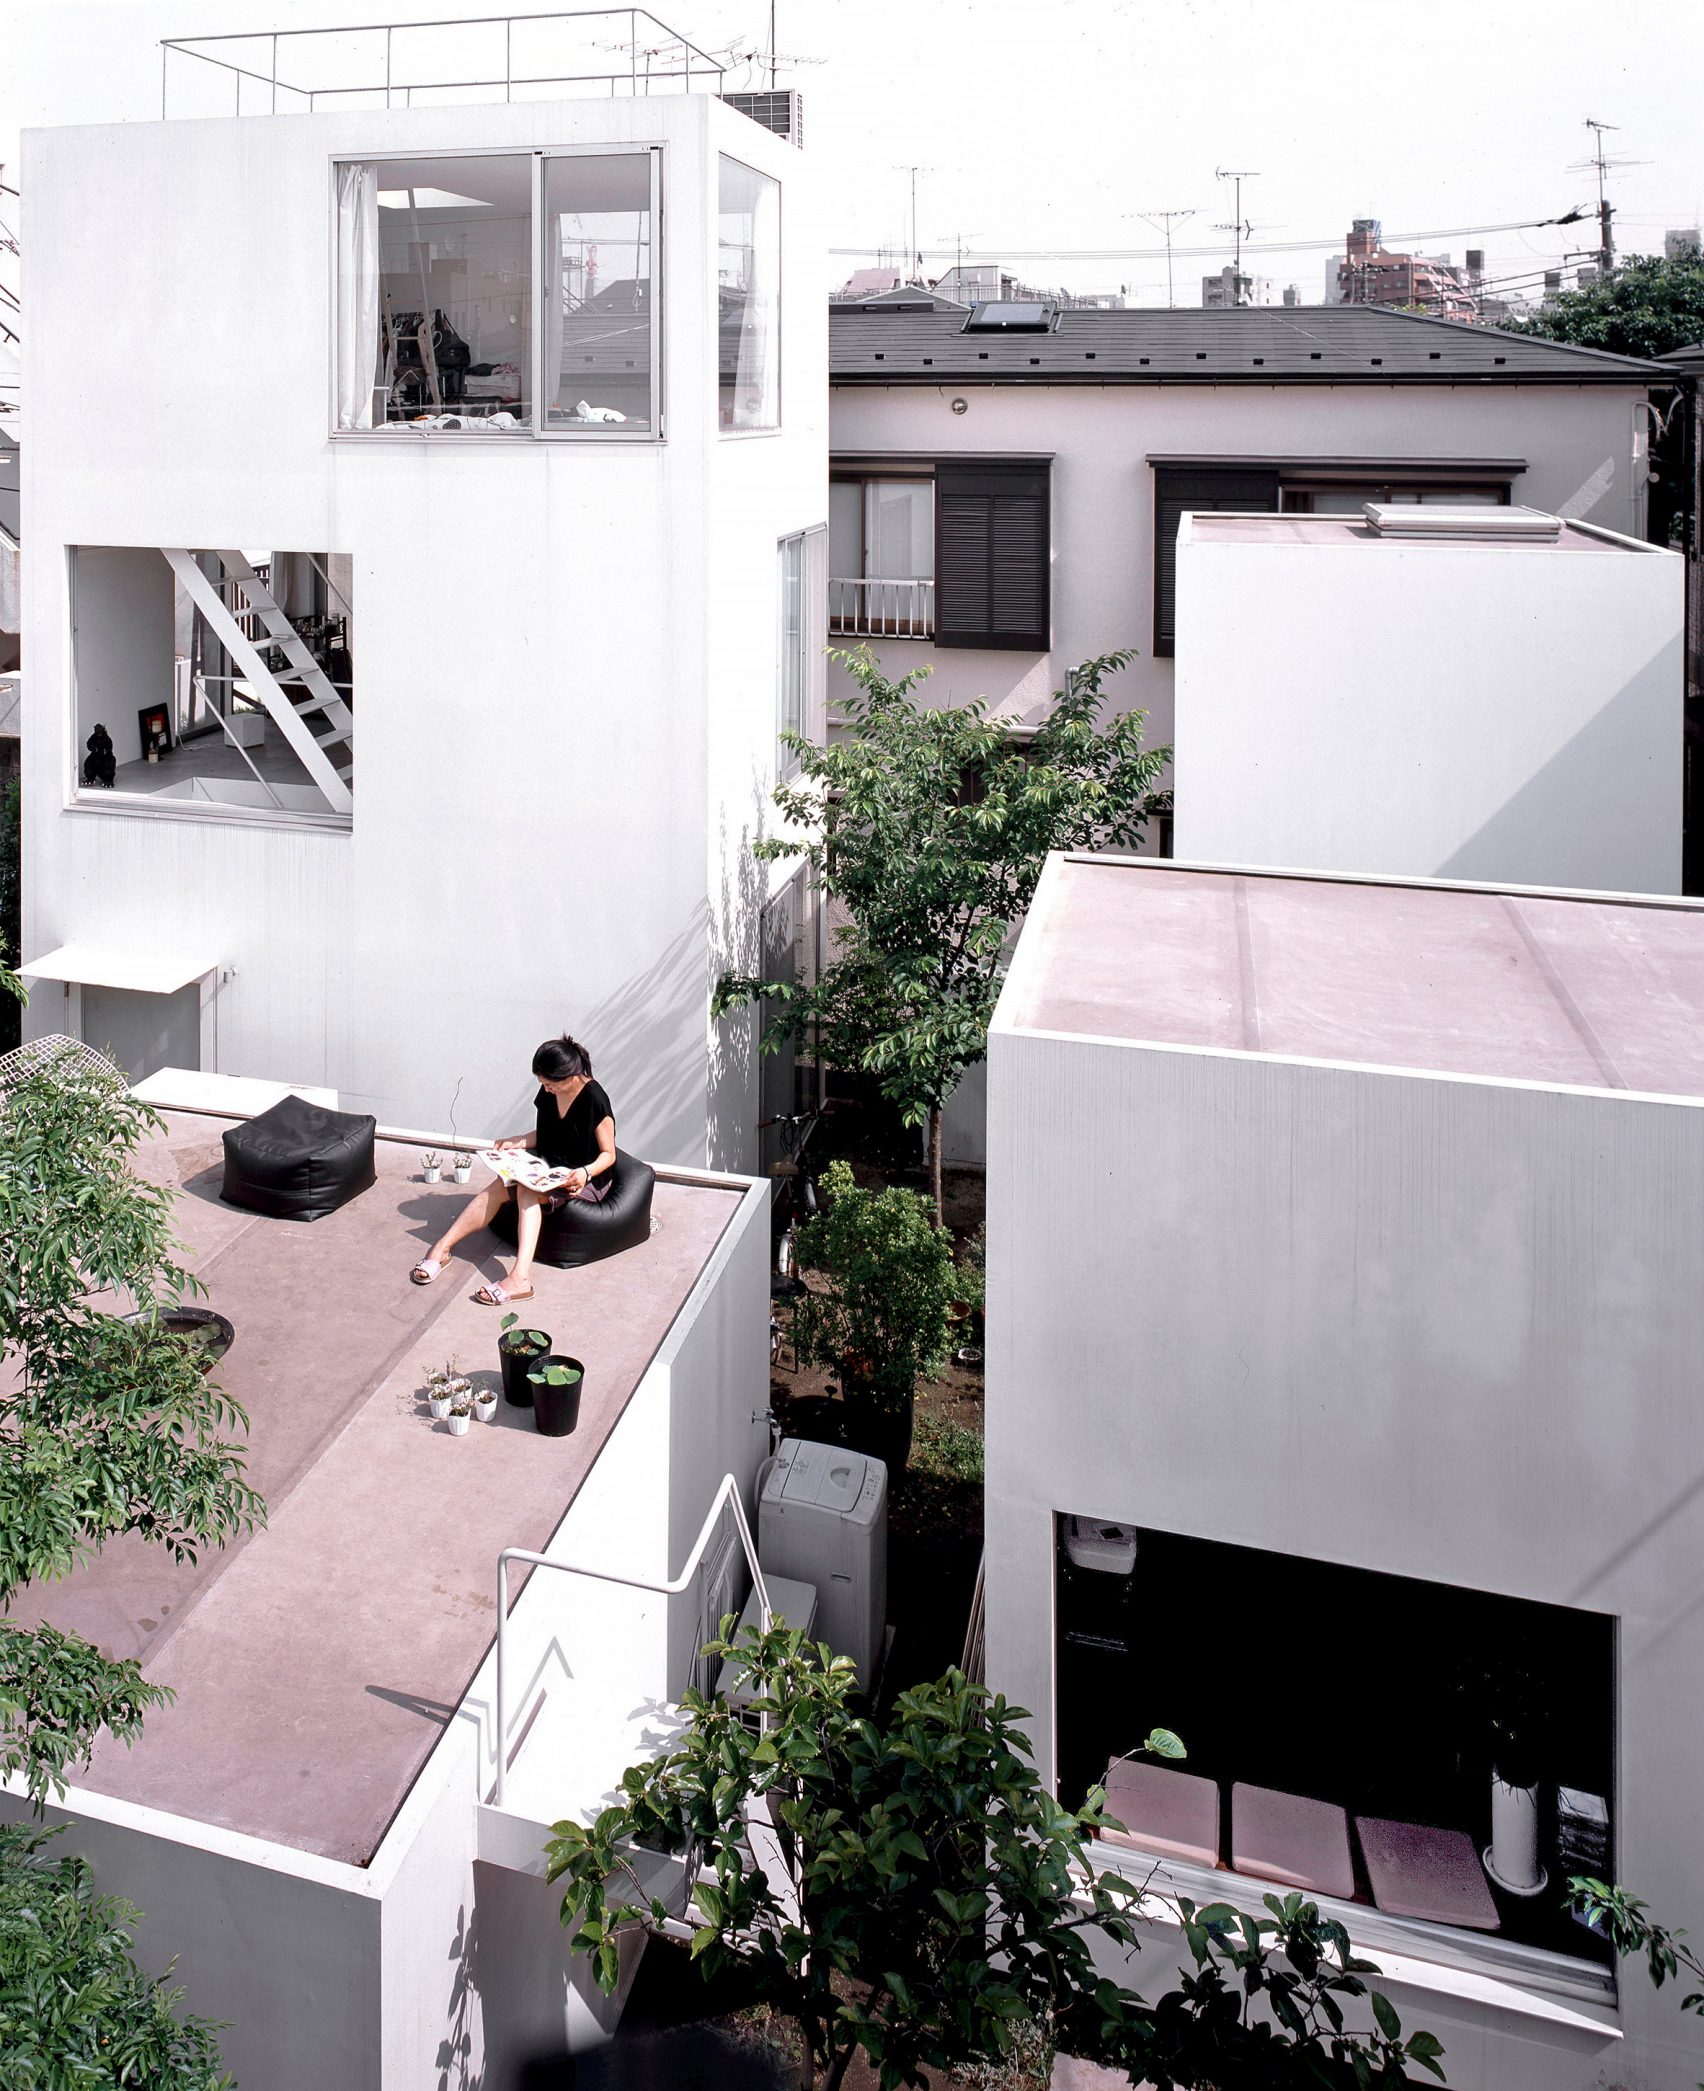 moriyama-house-photos-edmund-sumner-architecture-photography-residential-japan_dezeen_2364_col_12-1704x2091